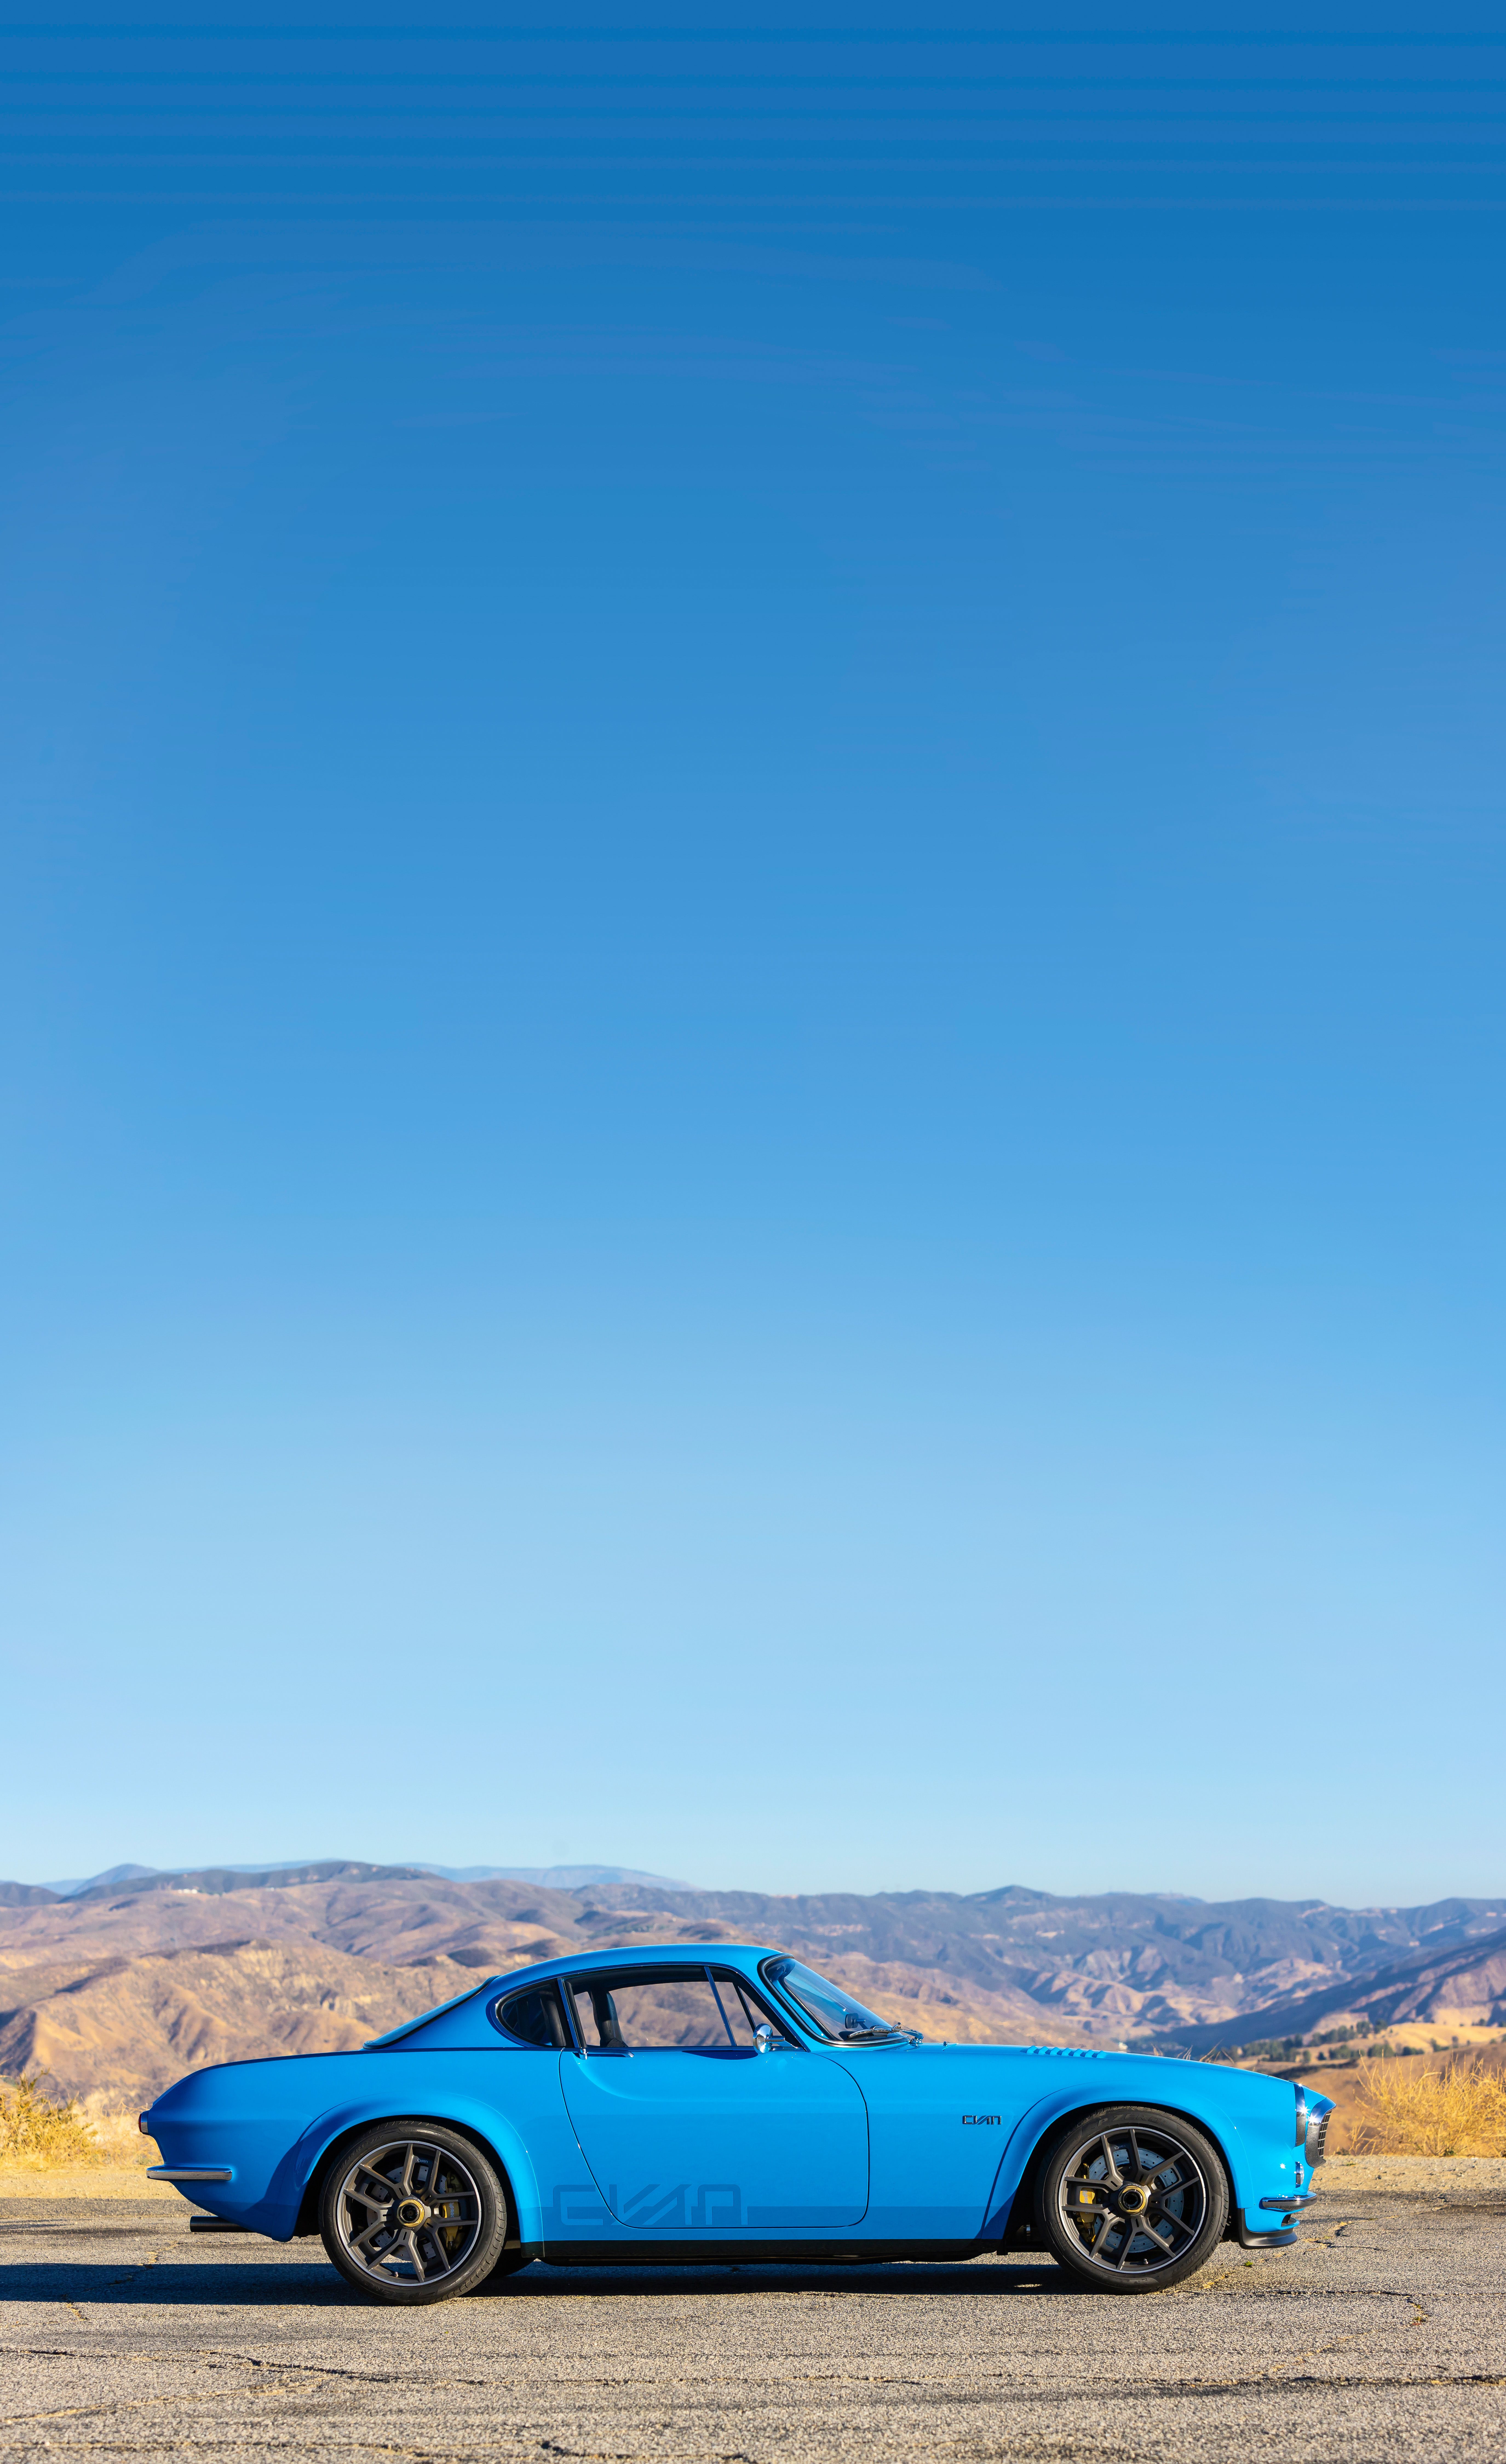 Volvo P1800 Cyan Racing Continuation Is a Carbon-Fiber Restomod